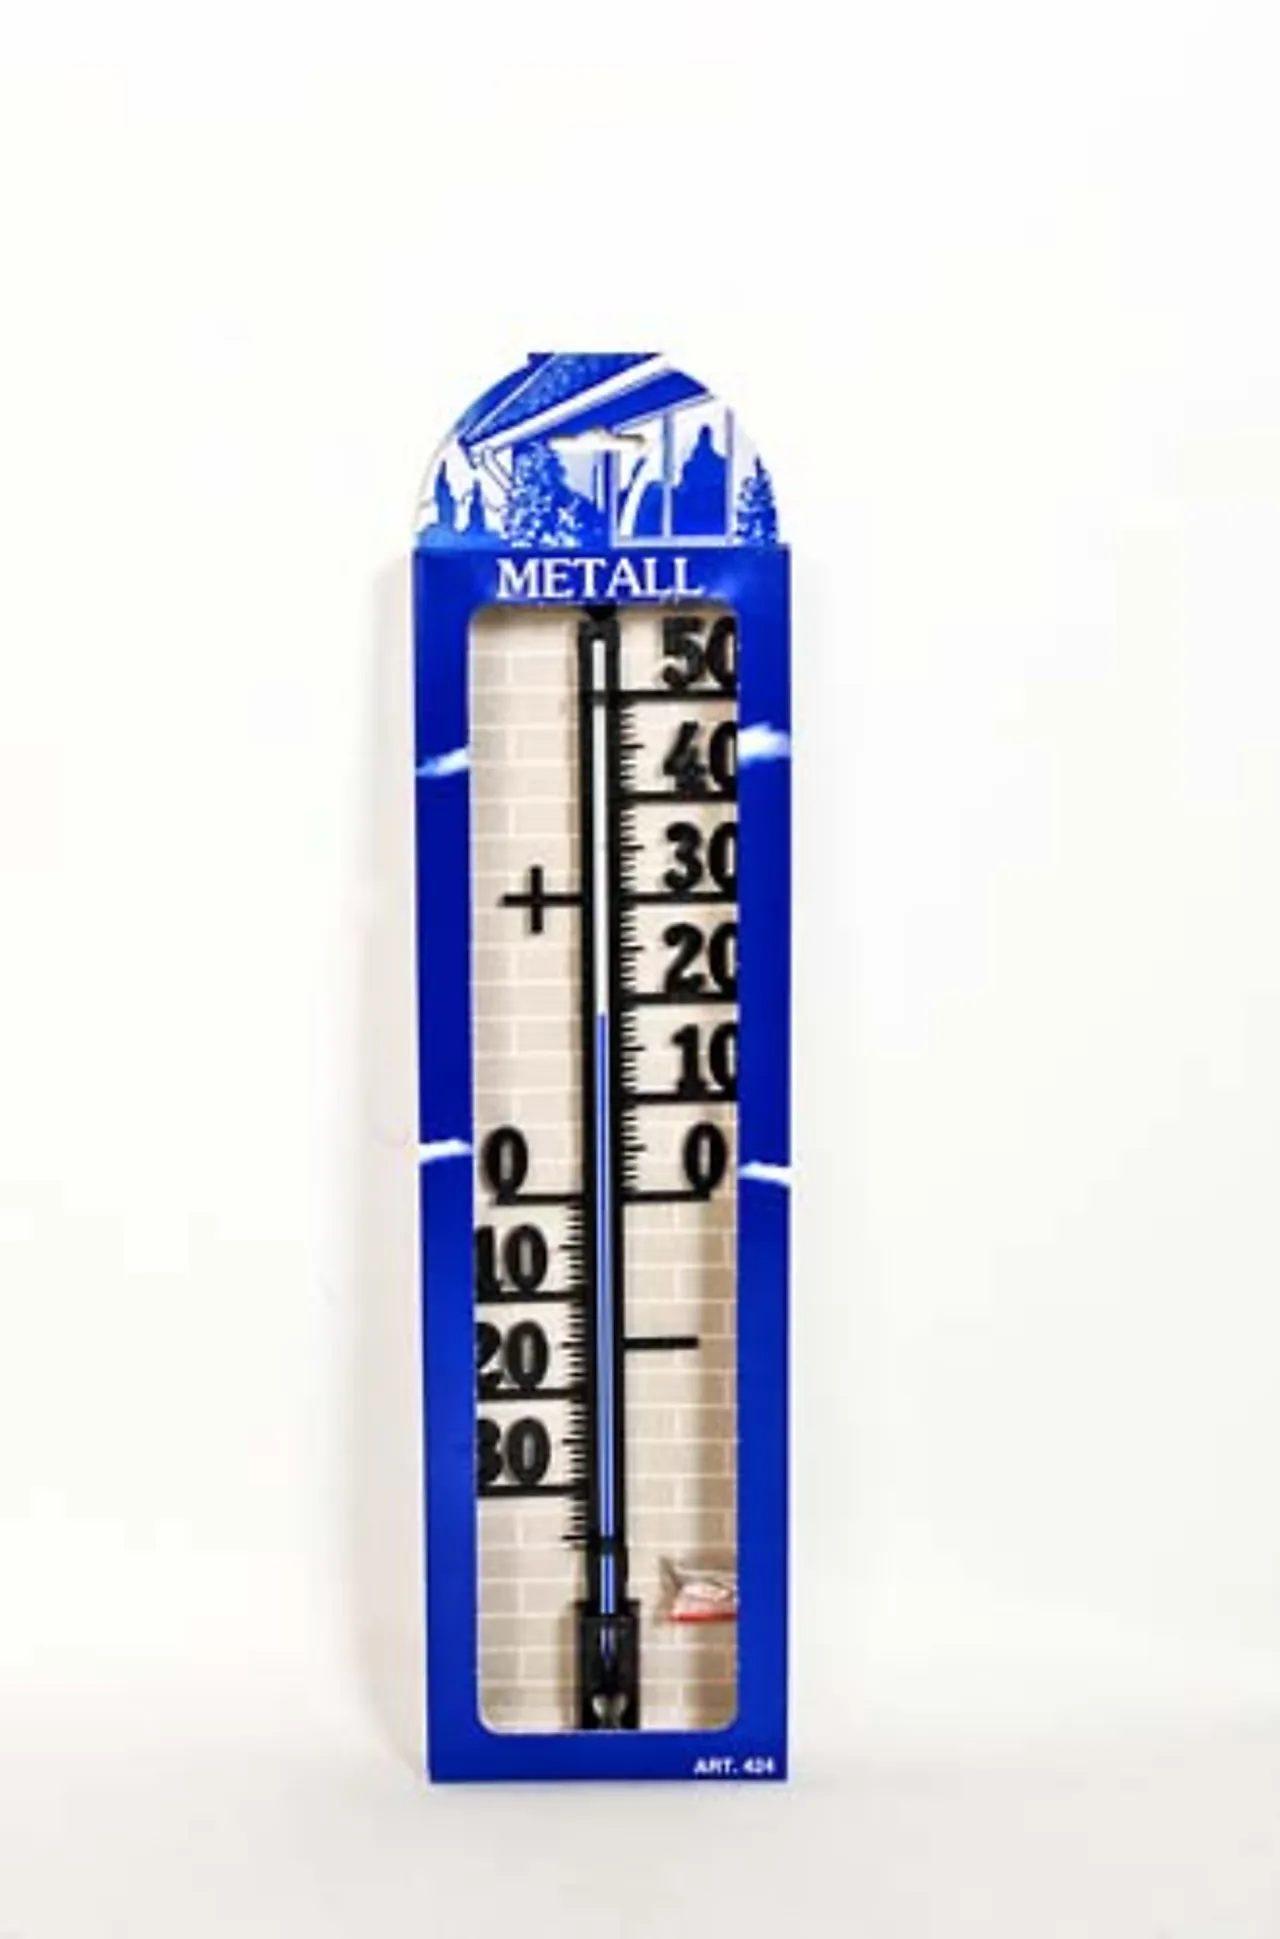 Termometer ute metall 42cm 424